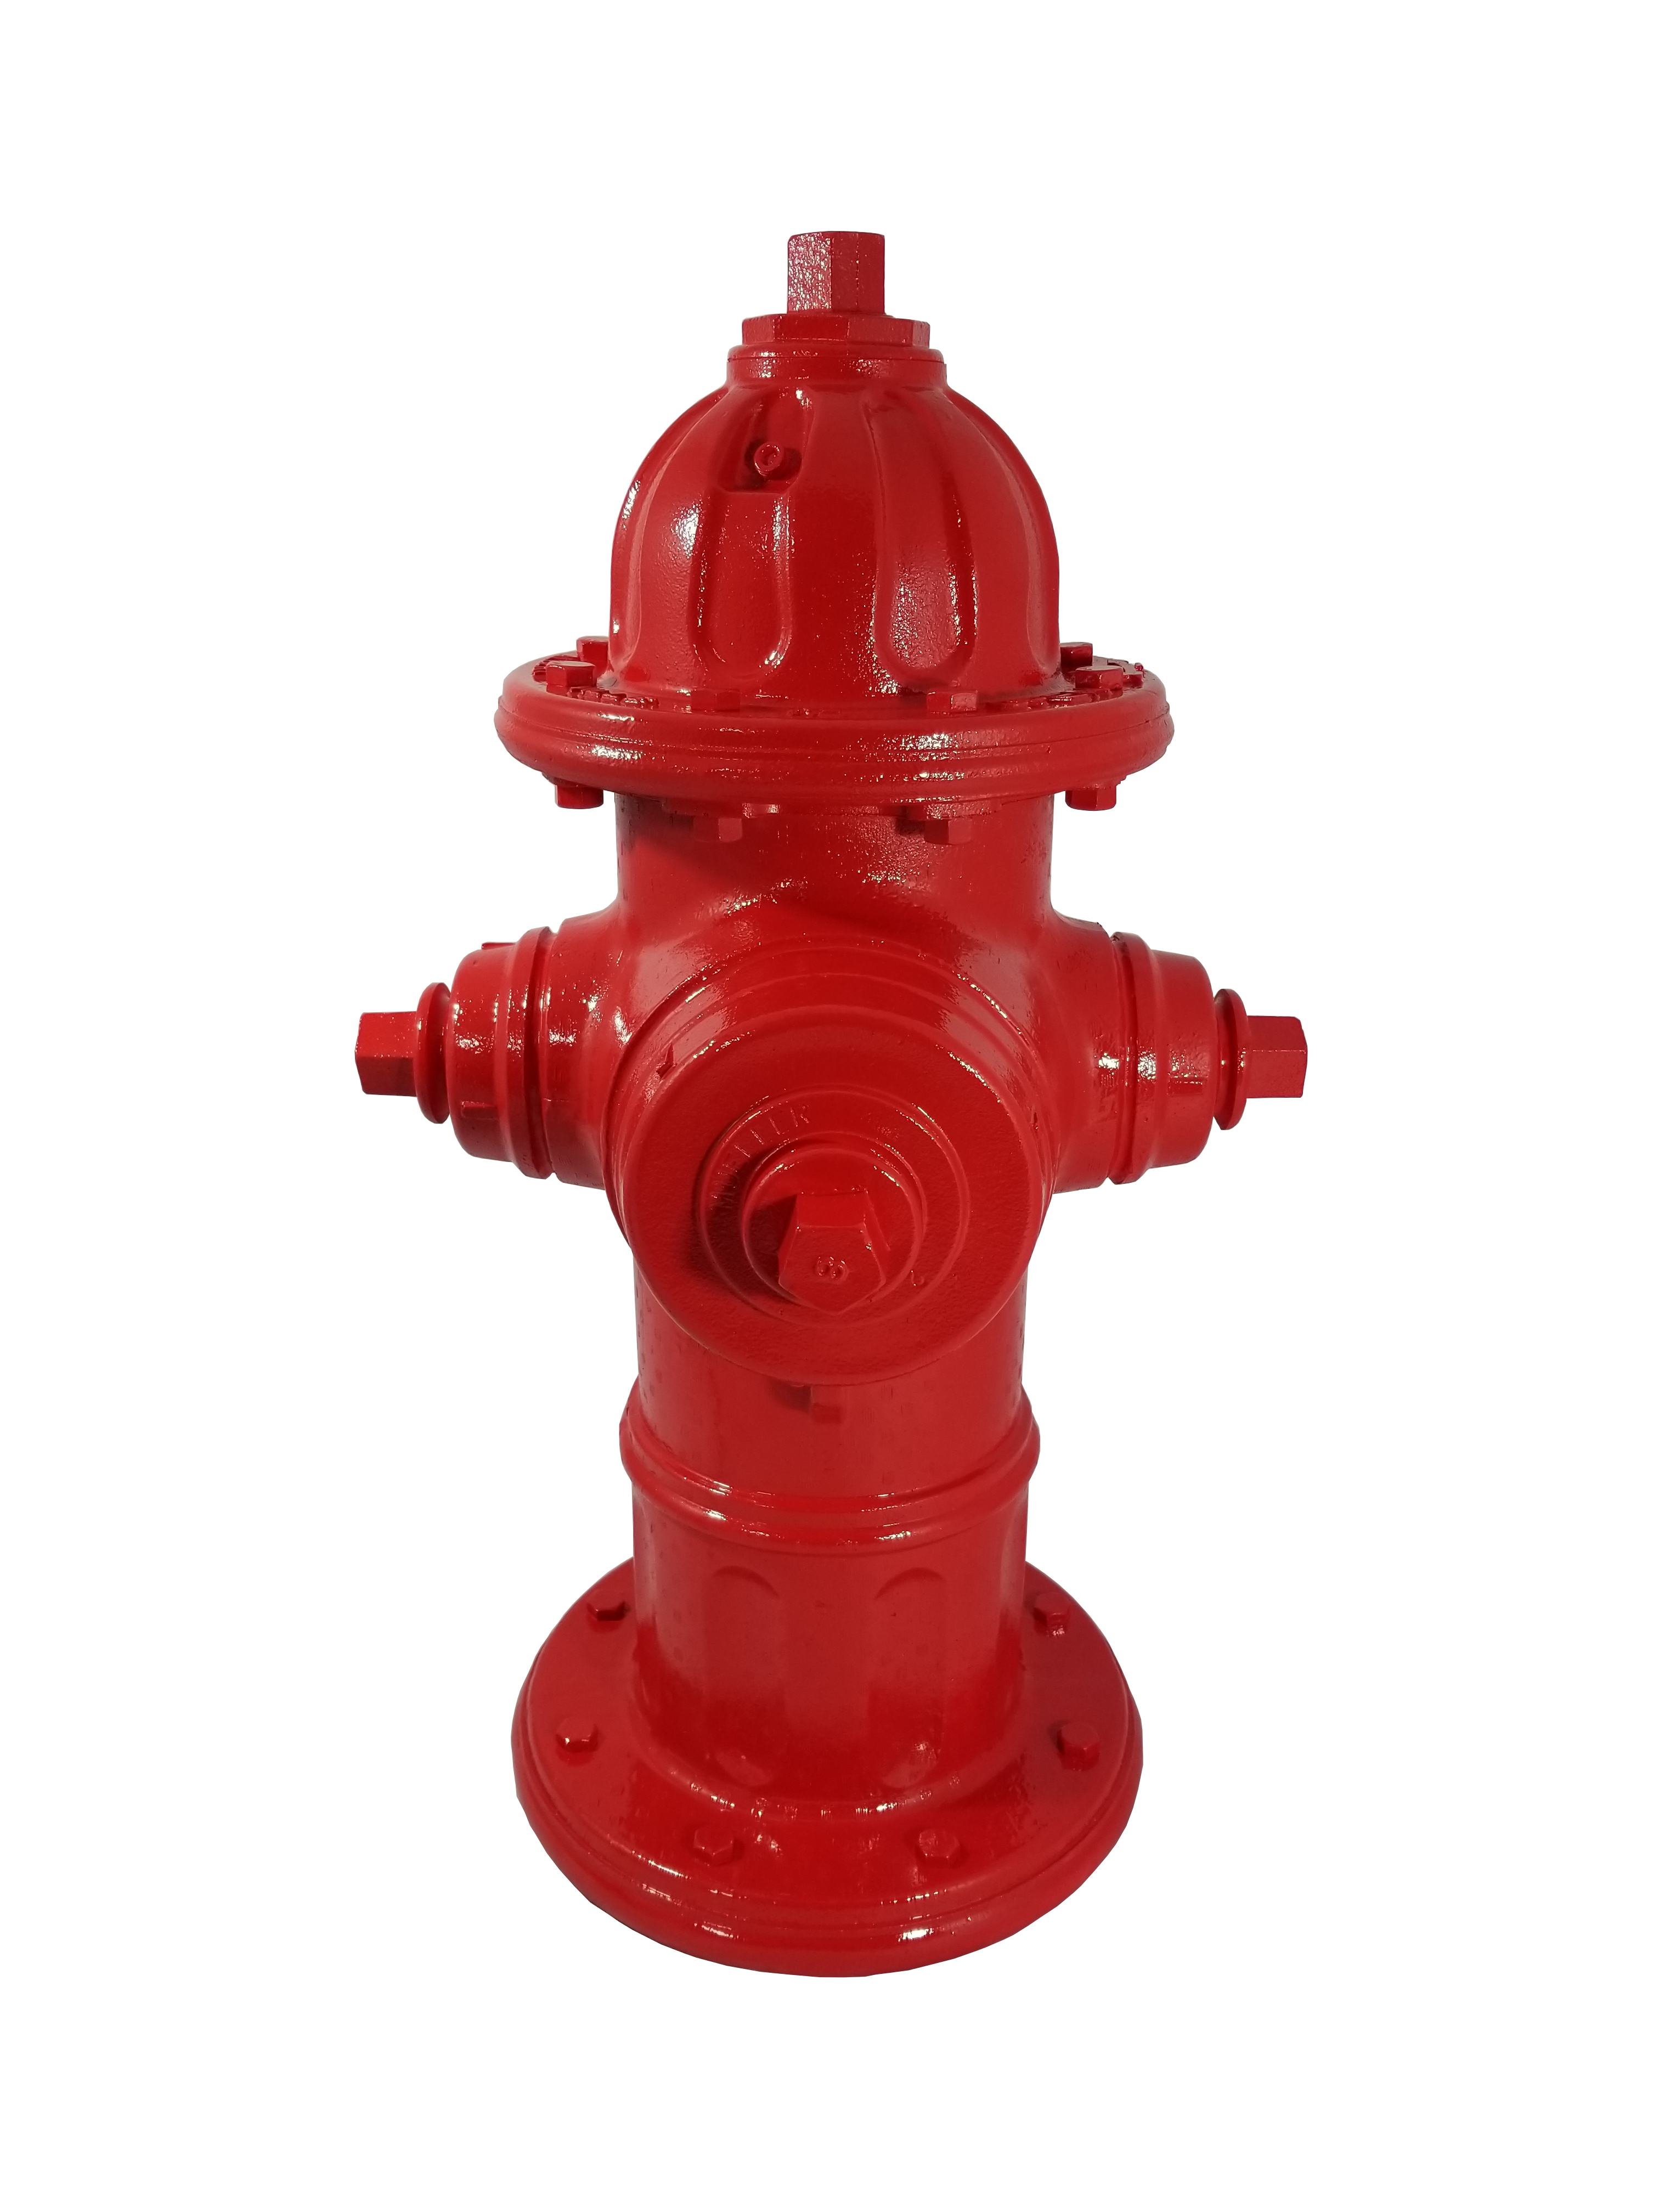 Fire hydrant photo